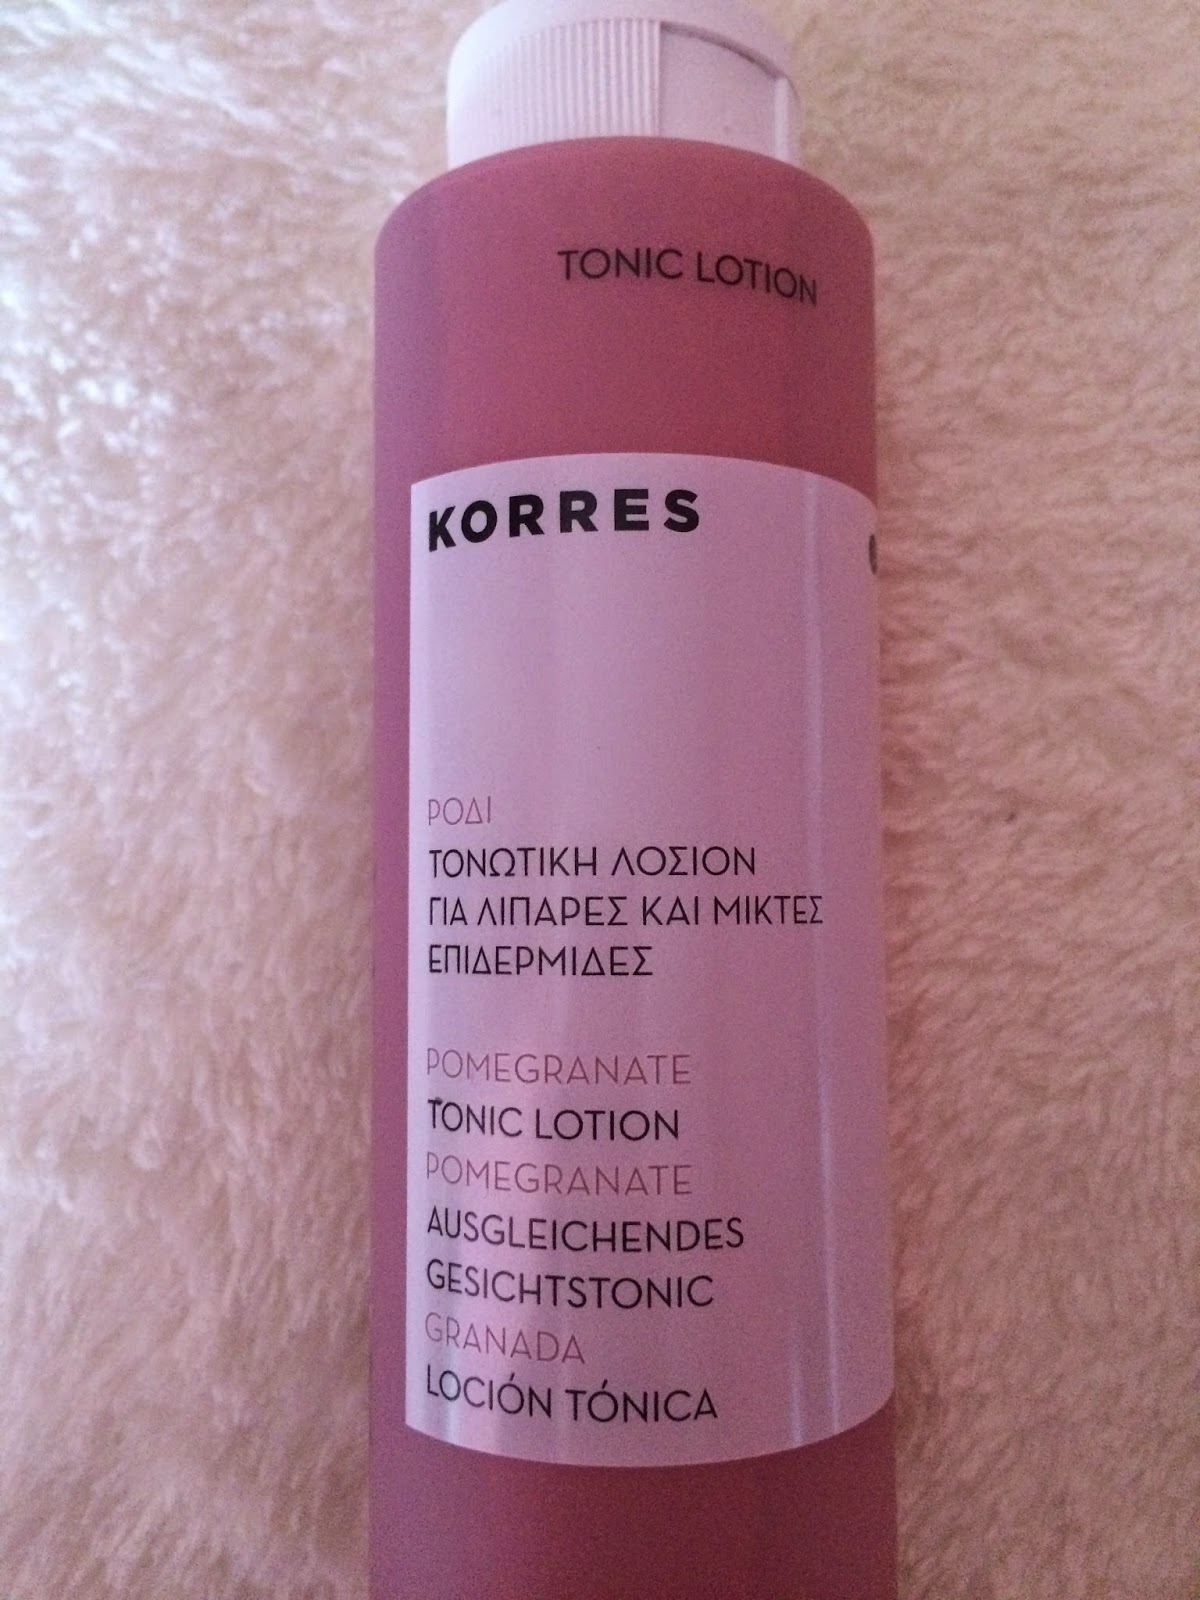 pomegranate tonic lotion by Korres review bubblybeauty135